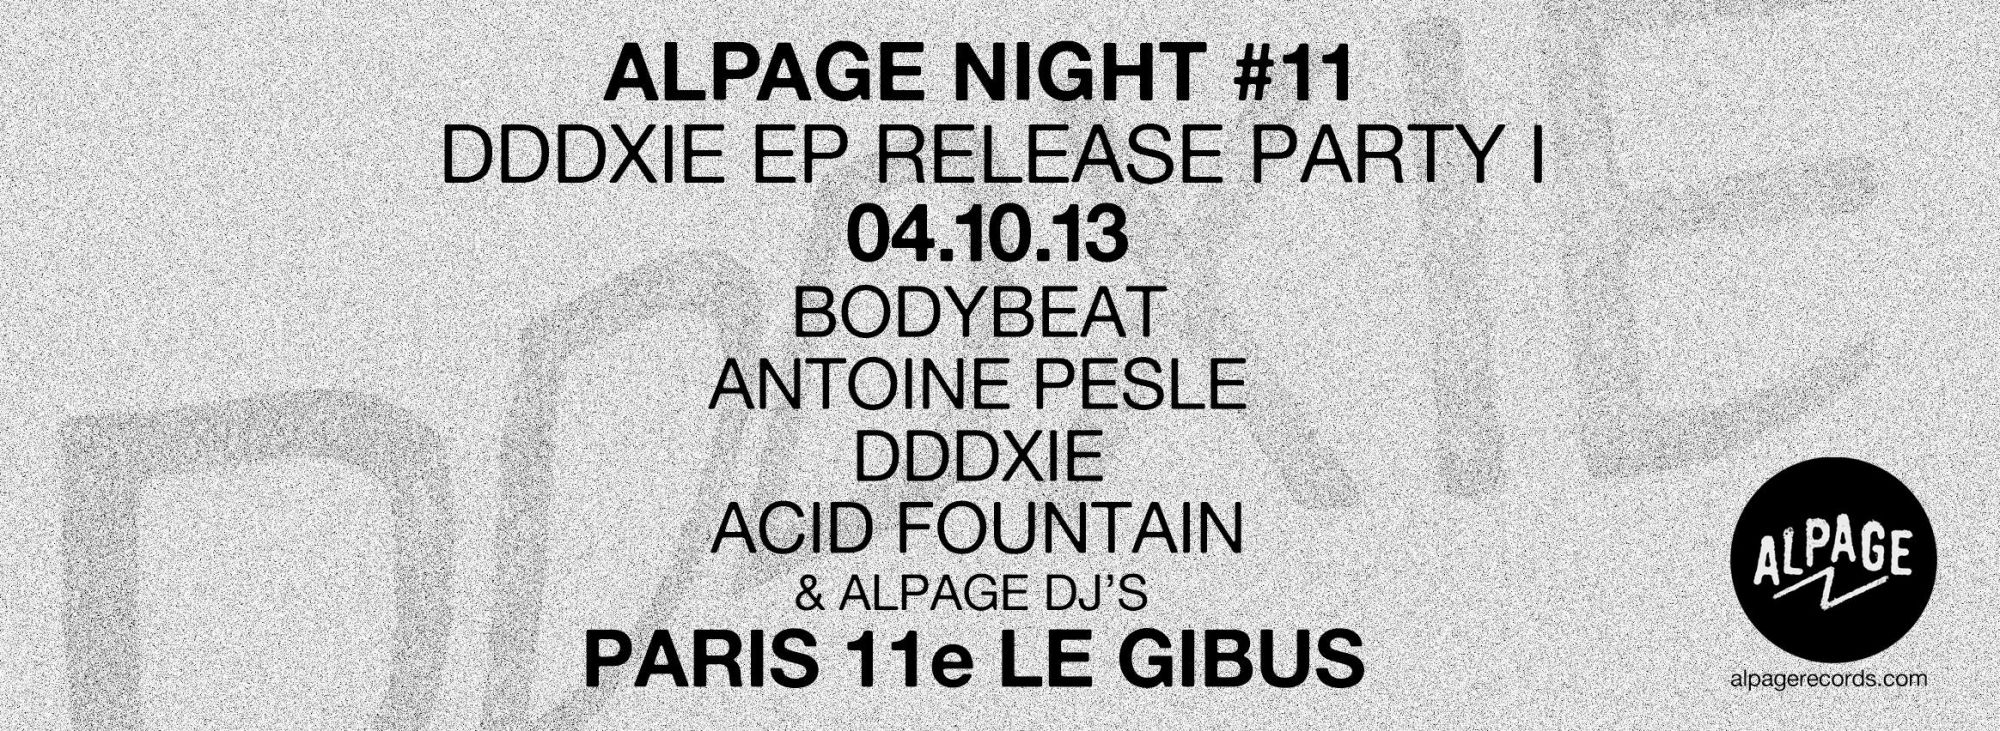 Alpage Night #11 au Gibus Café!